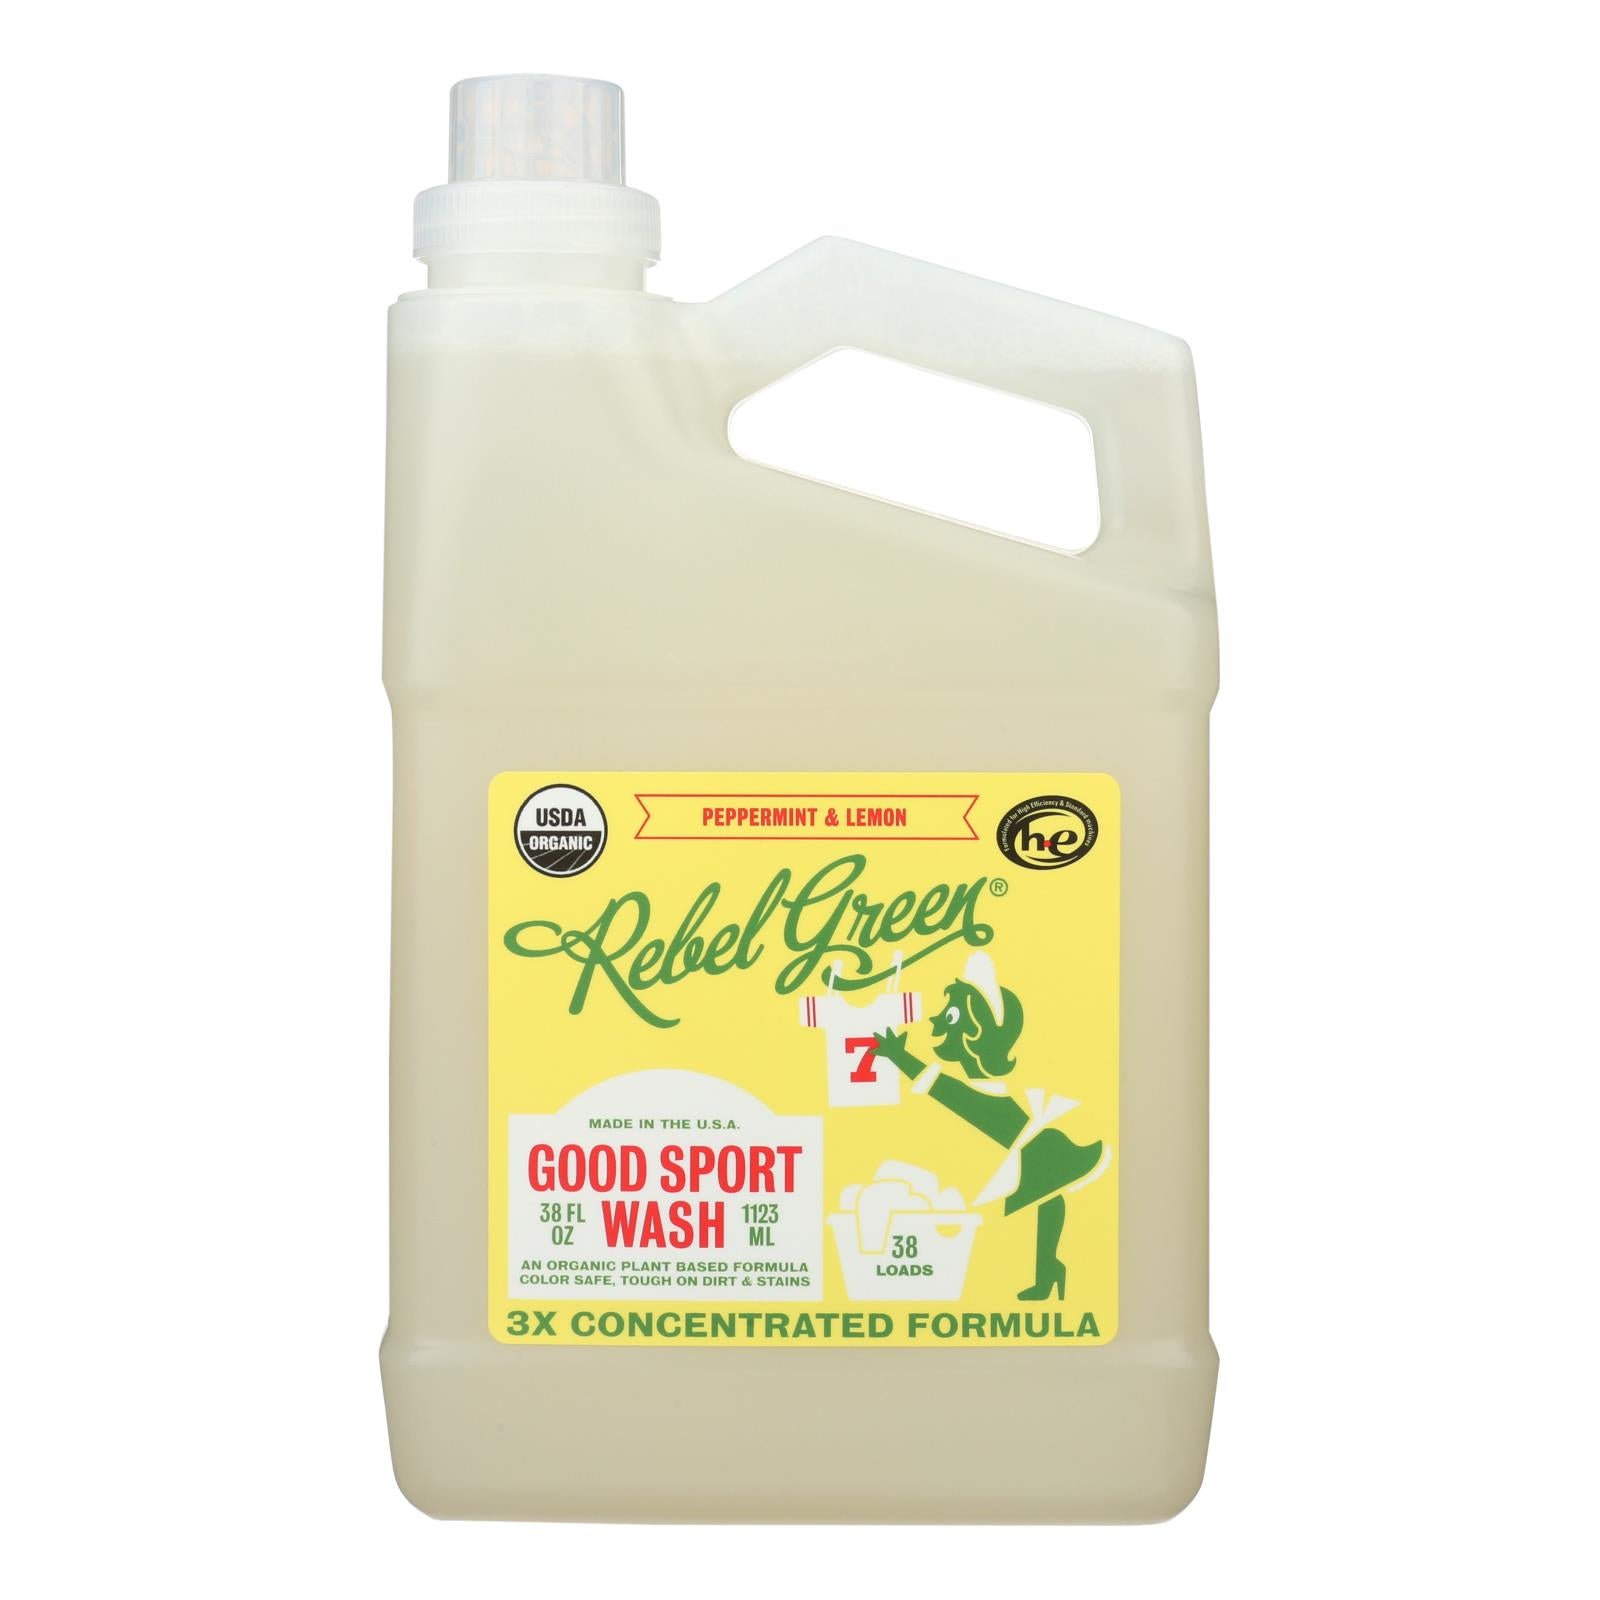 Rebel Green - Laundry Detergent Good Sport Wash - Lemon and Peppermint - Case of 4 - 38 fl oz.